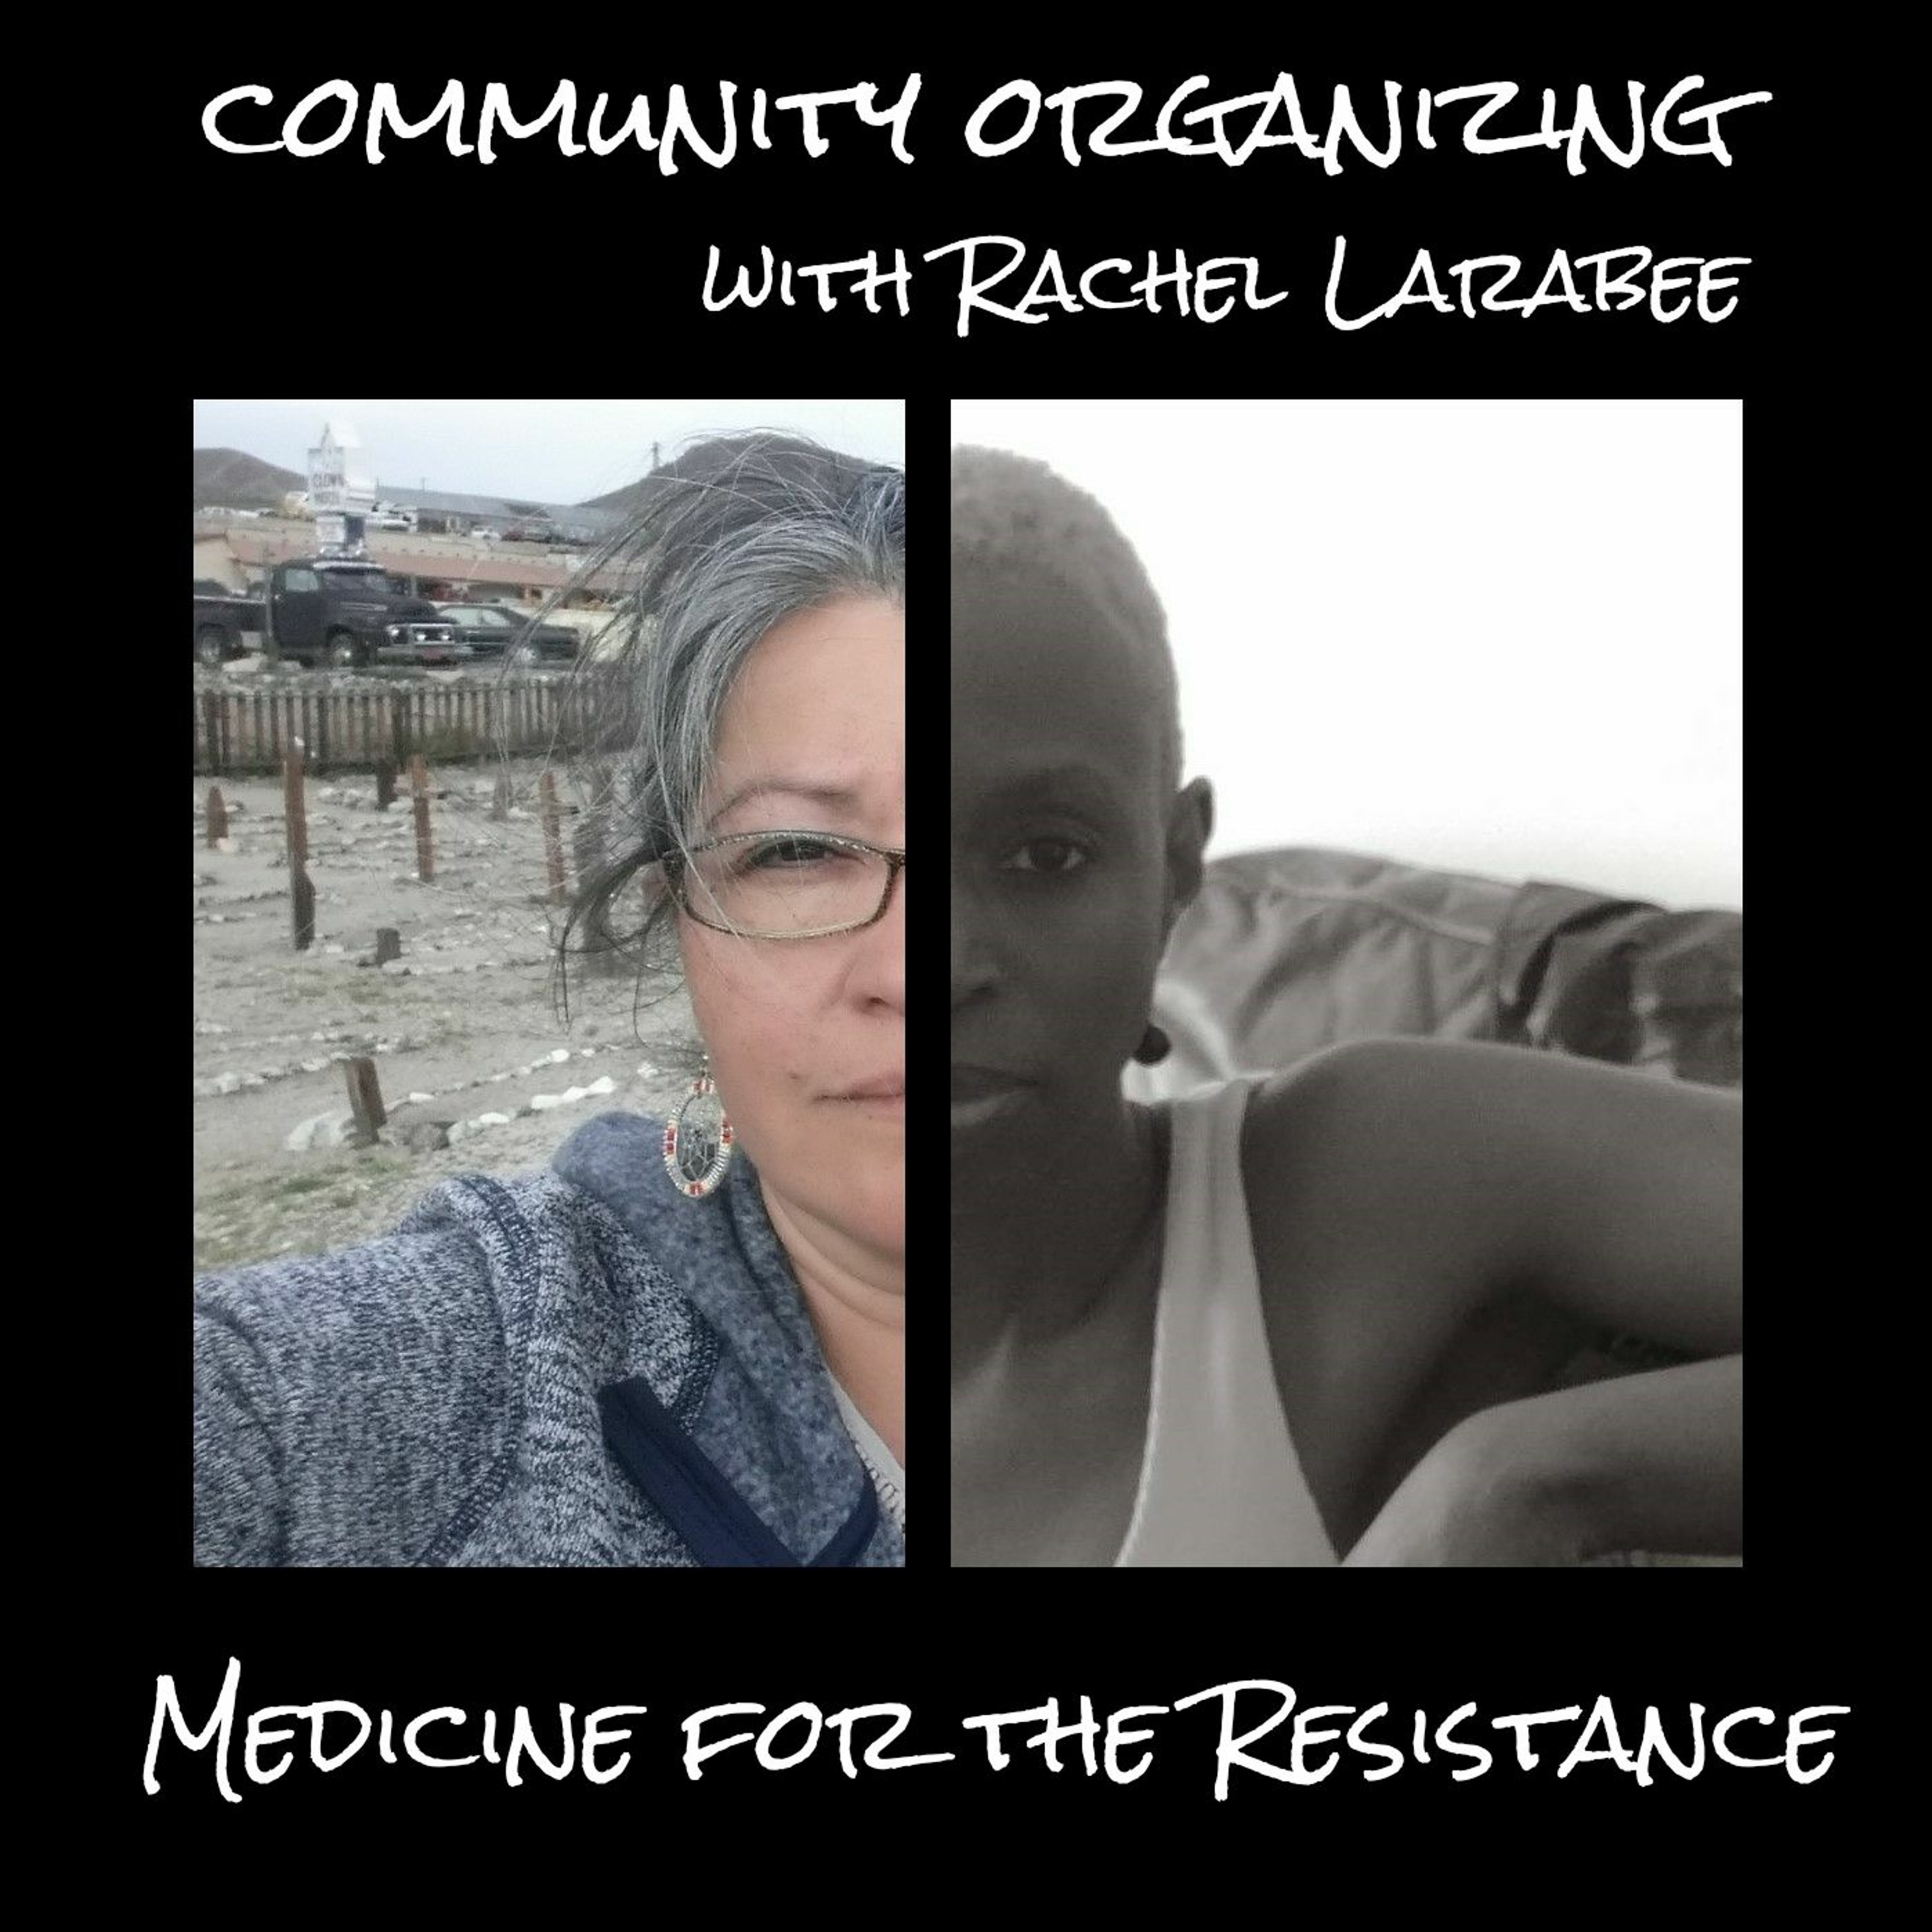 Community organizing with Rachel Larabee